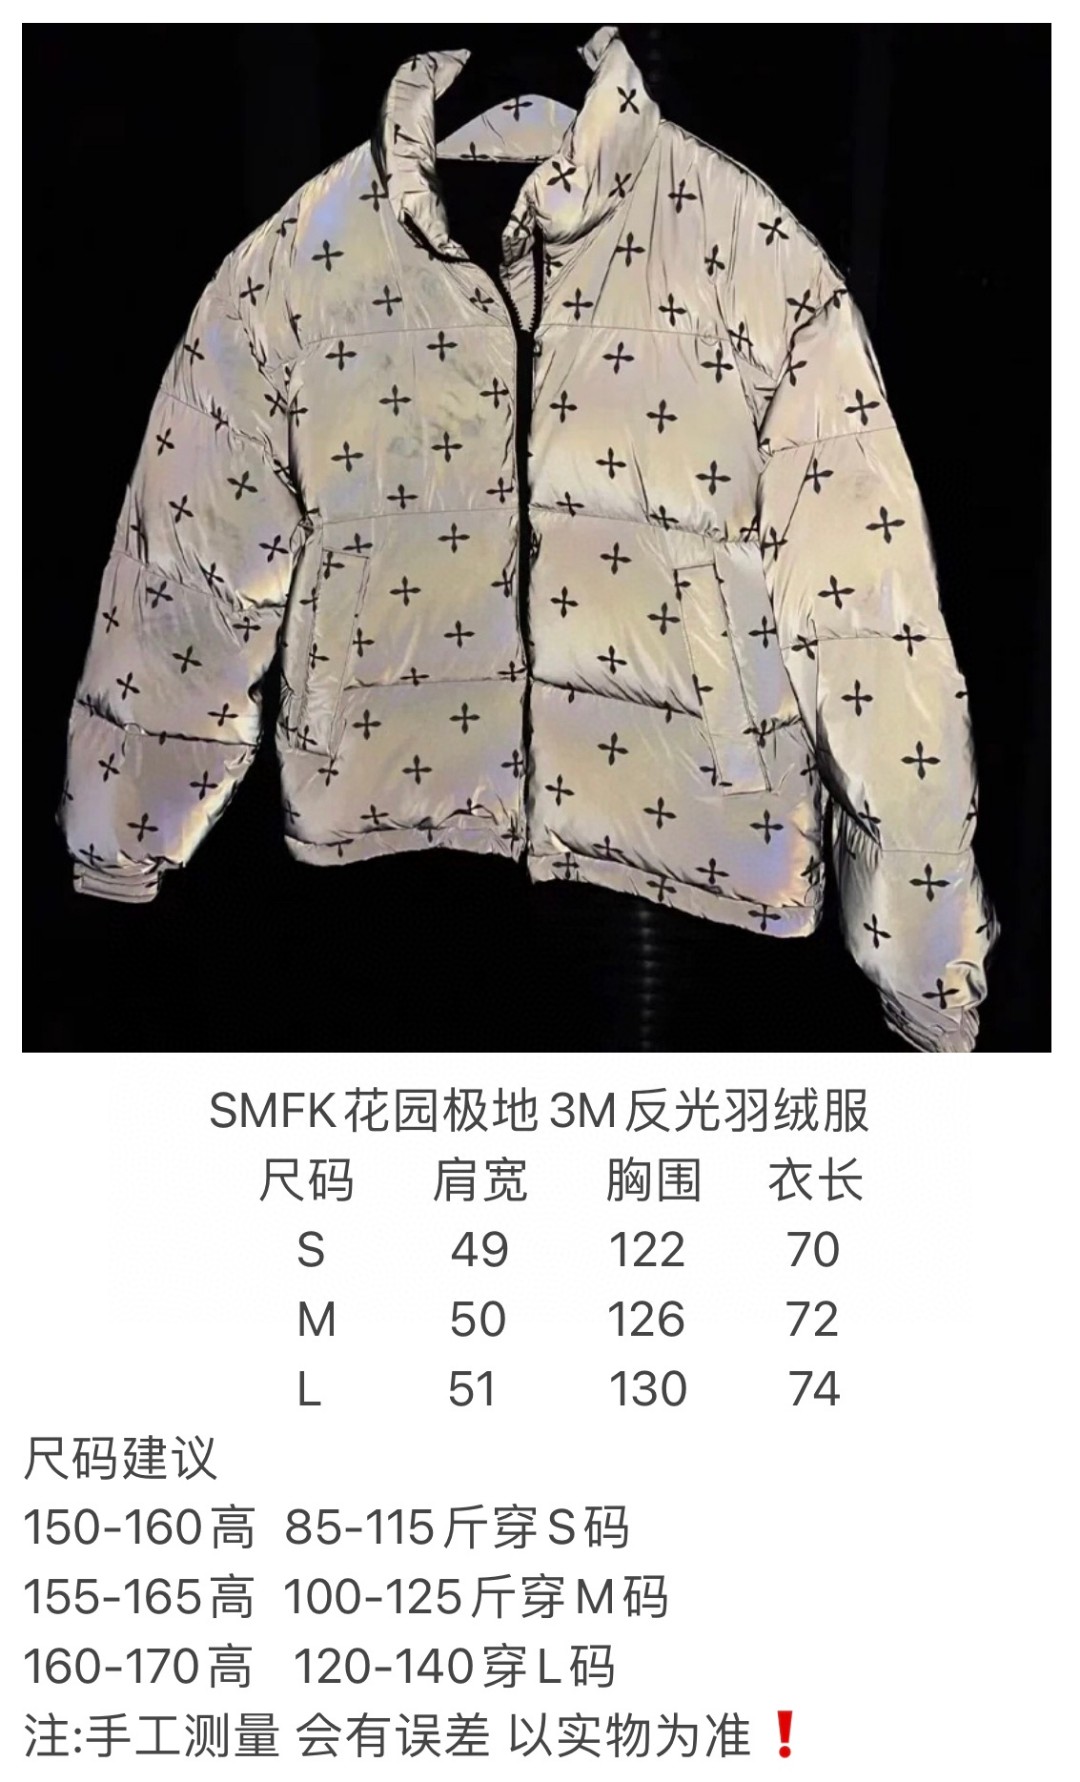 smfkダウンジャケットスーパーコピー ファッション 人気 冬服 暖かい 激安品 ホワイト_9